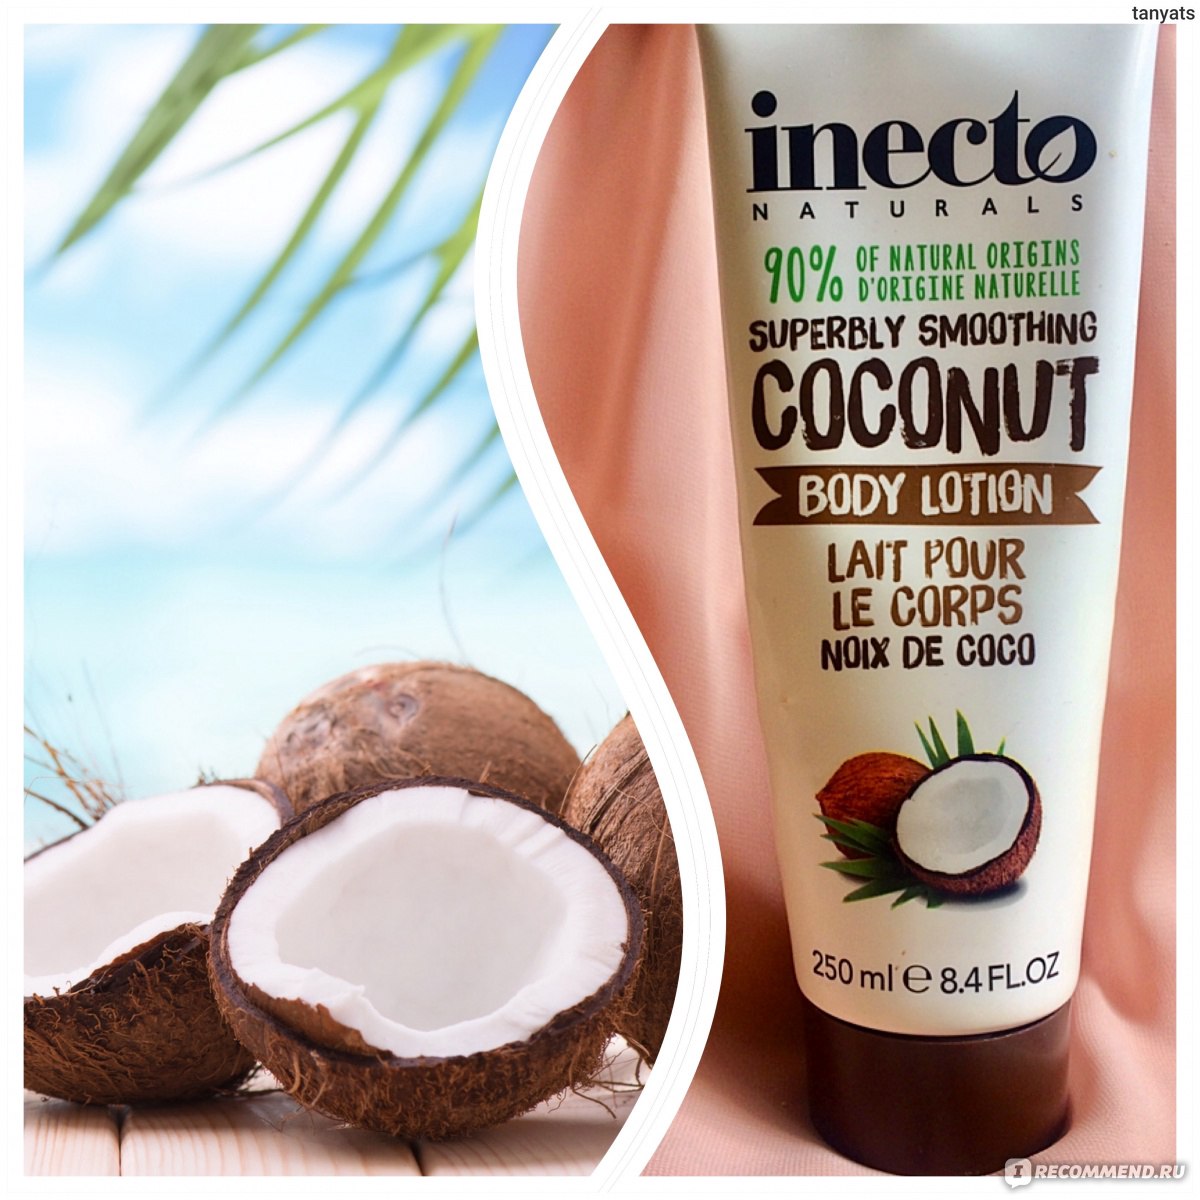 Natural coconut